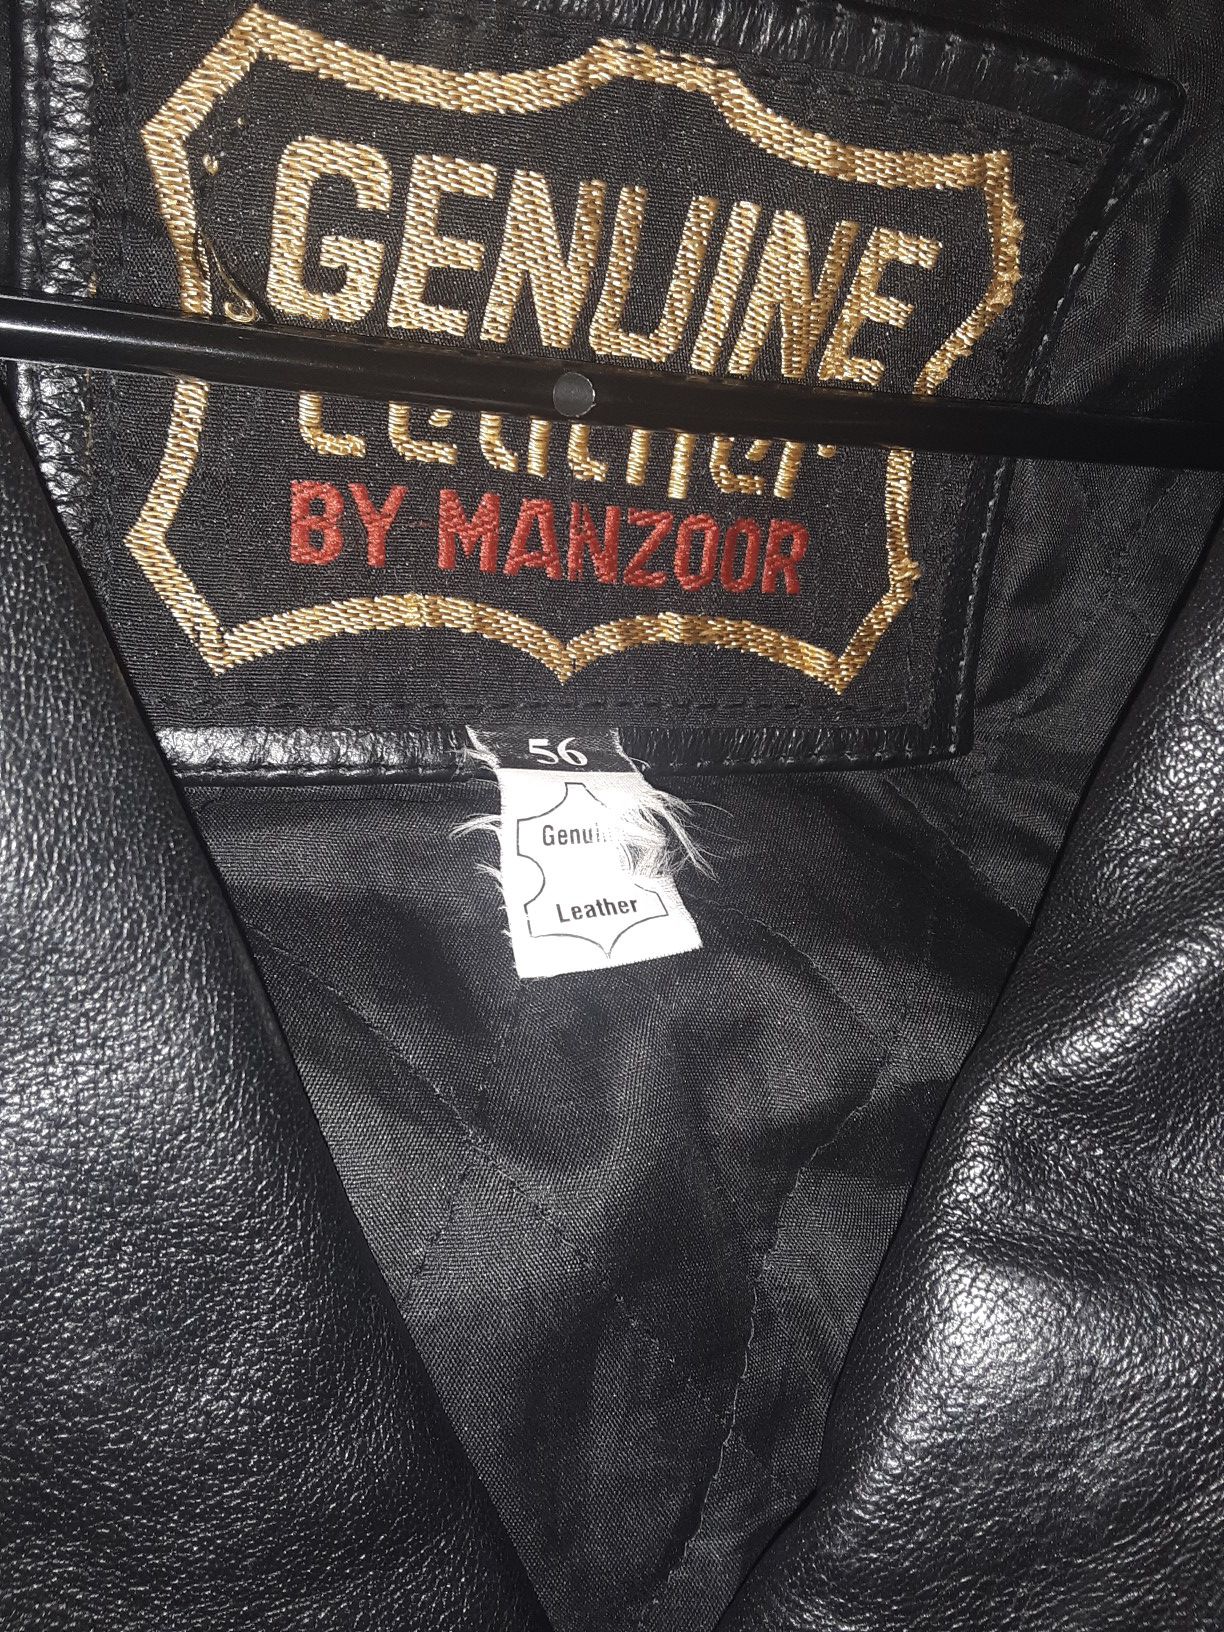 Leather motorcycle jacket